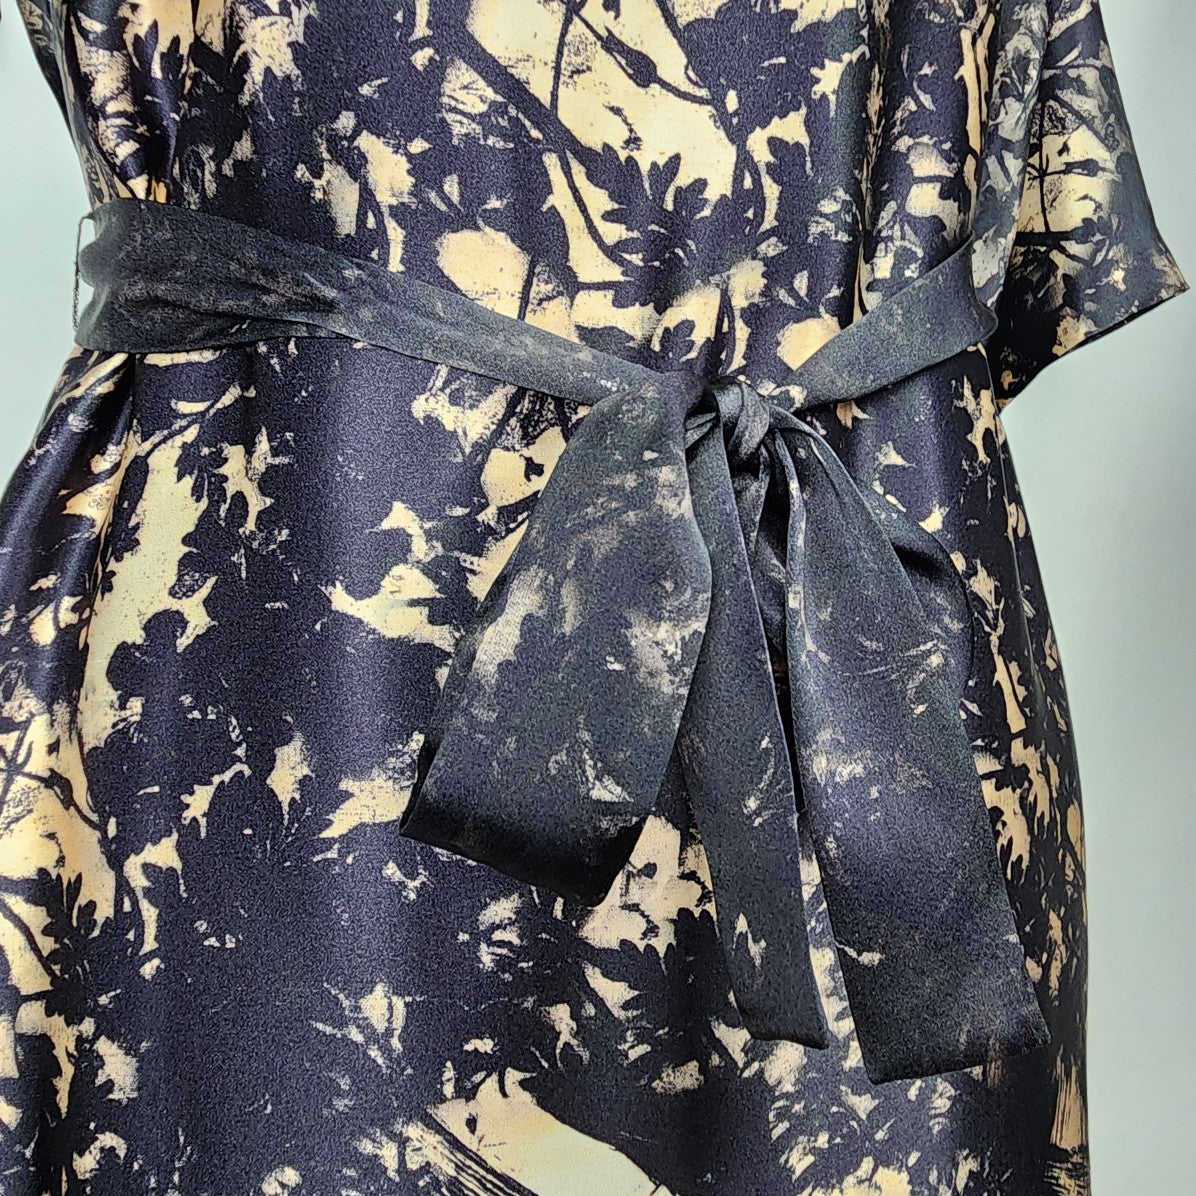 Hugo Boss Black Tropical Print Belted Silk Dress Size 8